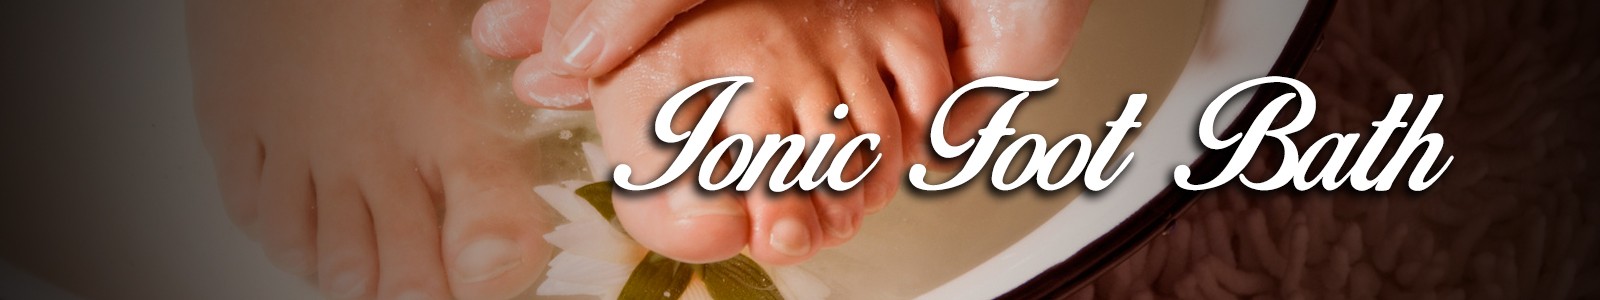 Ionic Foot Bath Wellness Origin Spa Indianapolis, IN